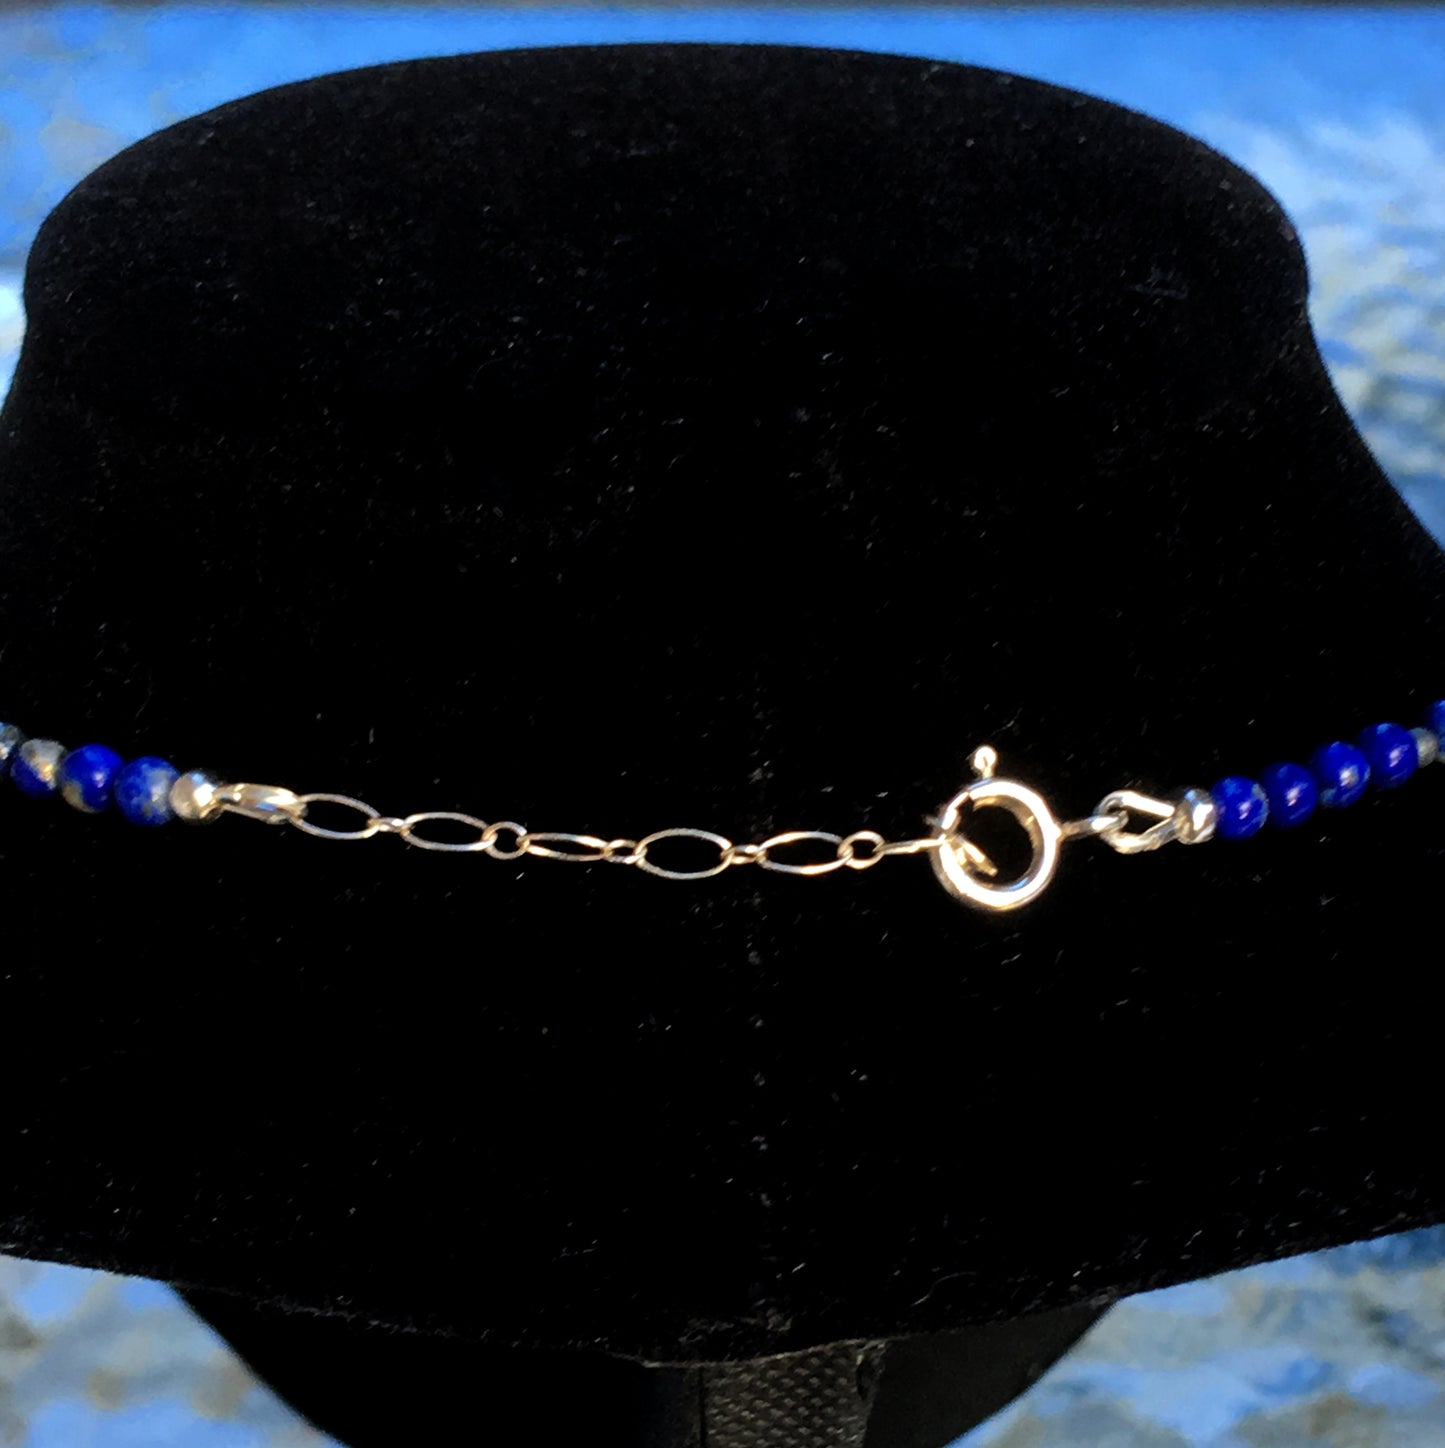 Women's Labradorite, Lapis Lazuli Gemstone Necklace